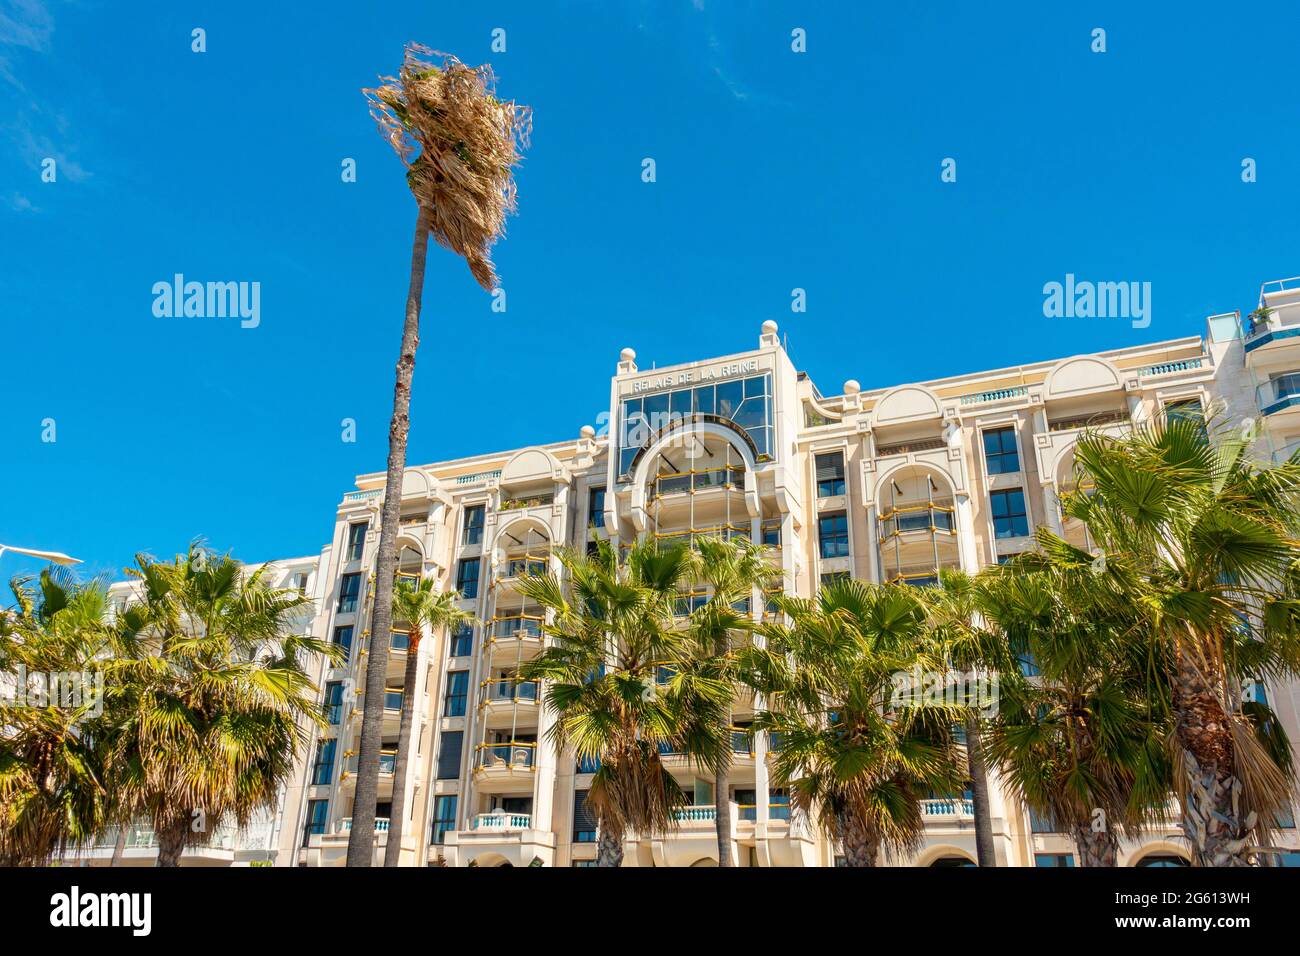 Francia, Alpi Marittime, Cannes, l'hotel Majestic Barrière Foto Stock